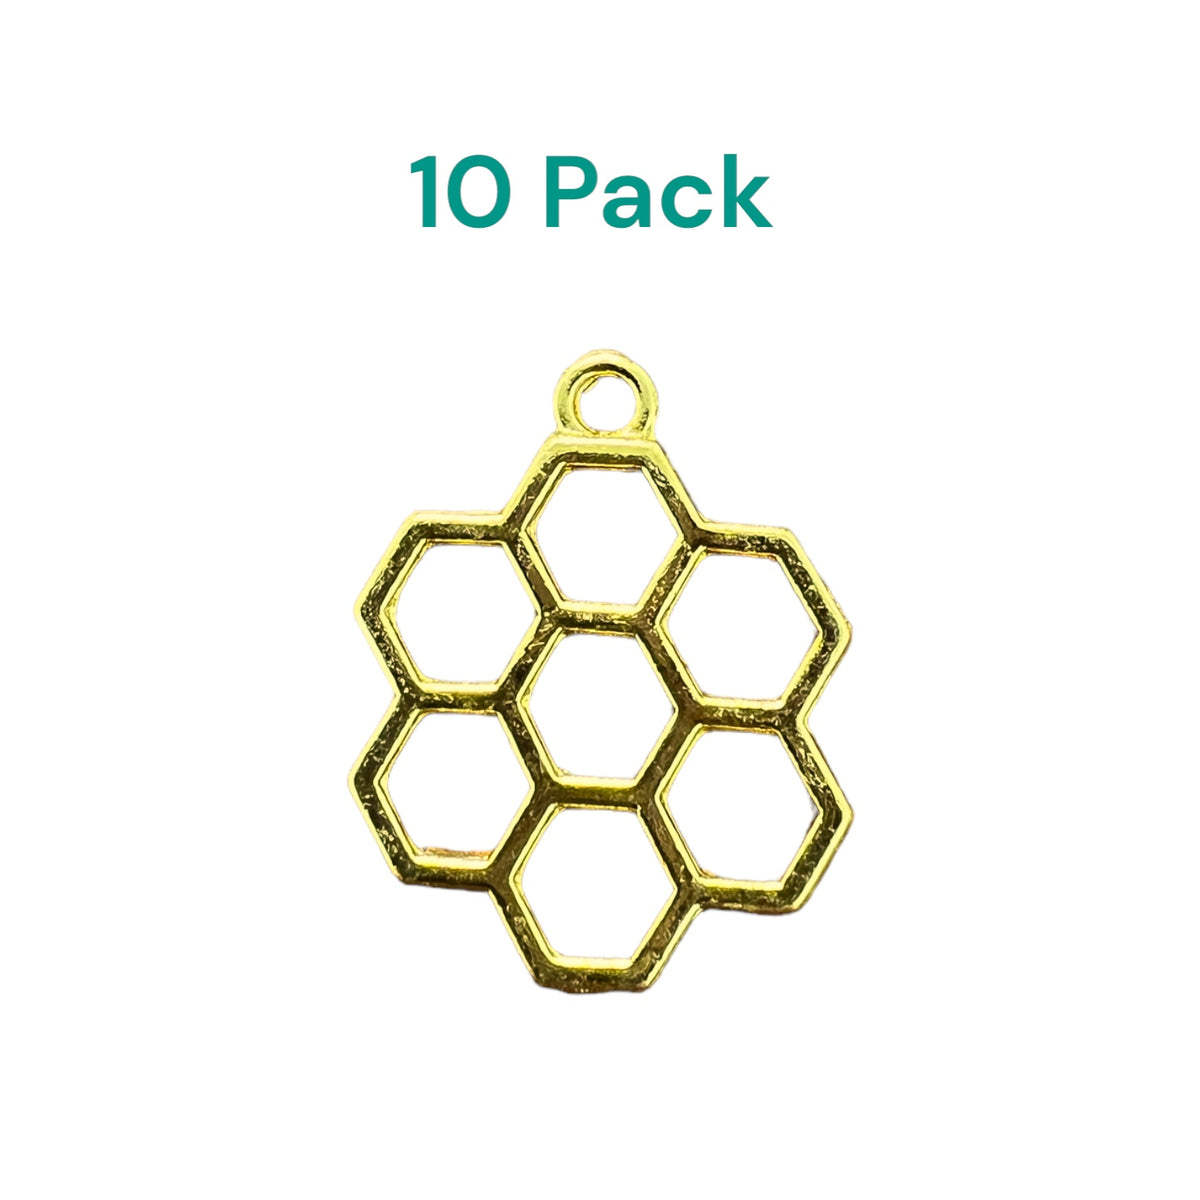 10 Pack of 7 part Honeycomb Shaped Open Back Pendant or Earring Bezel Blank for UV or Epoxy Resin